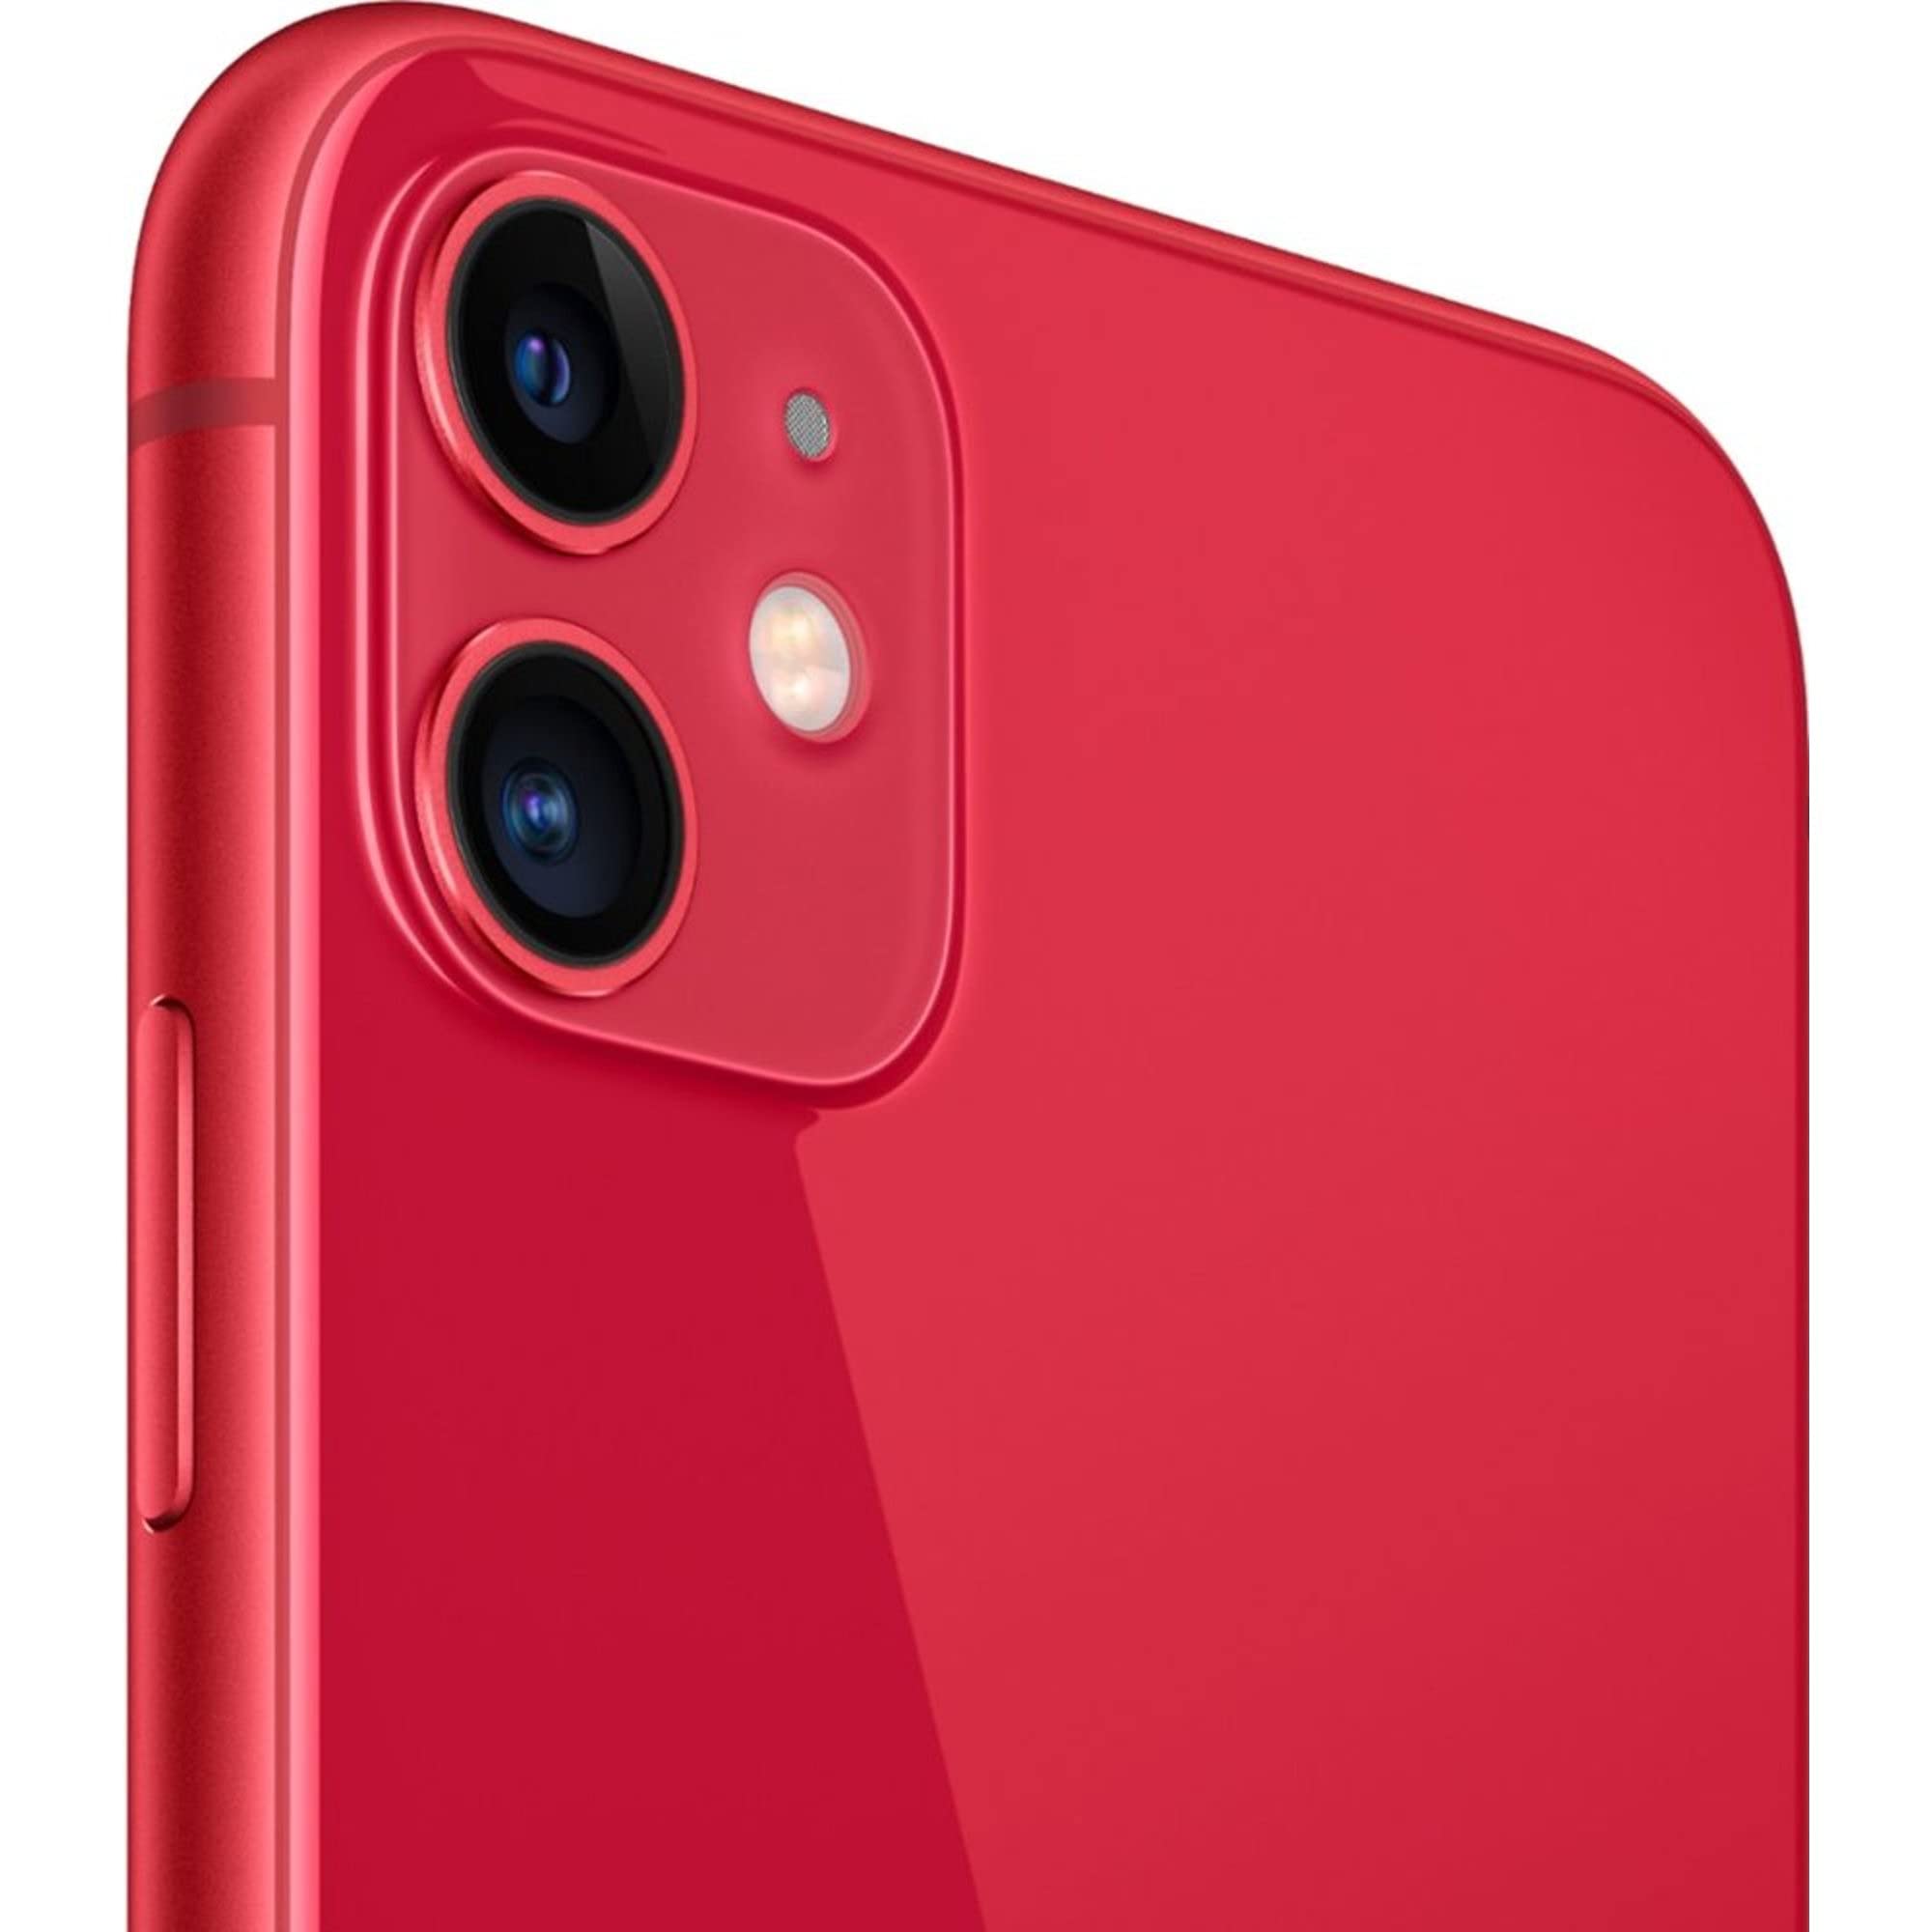 Apple iPhone 11, 64GB, Red - Unlocked (Renewed Premium)